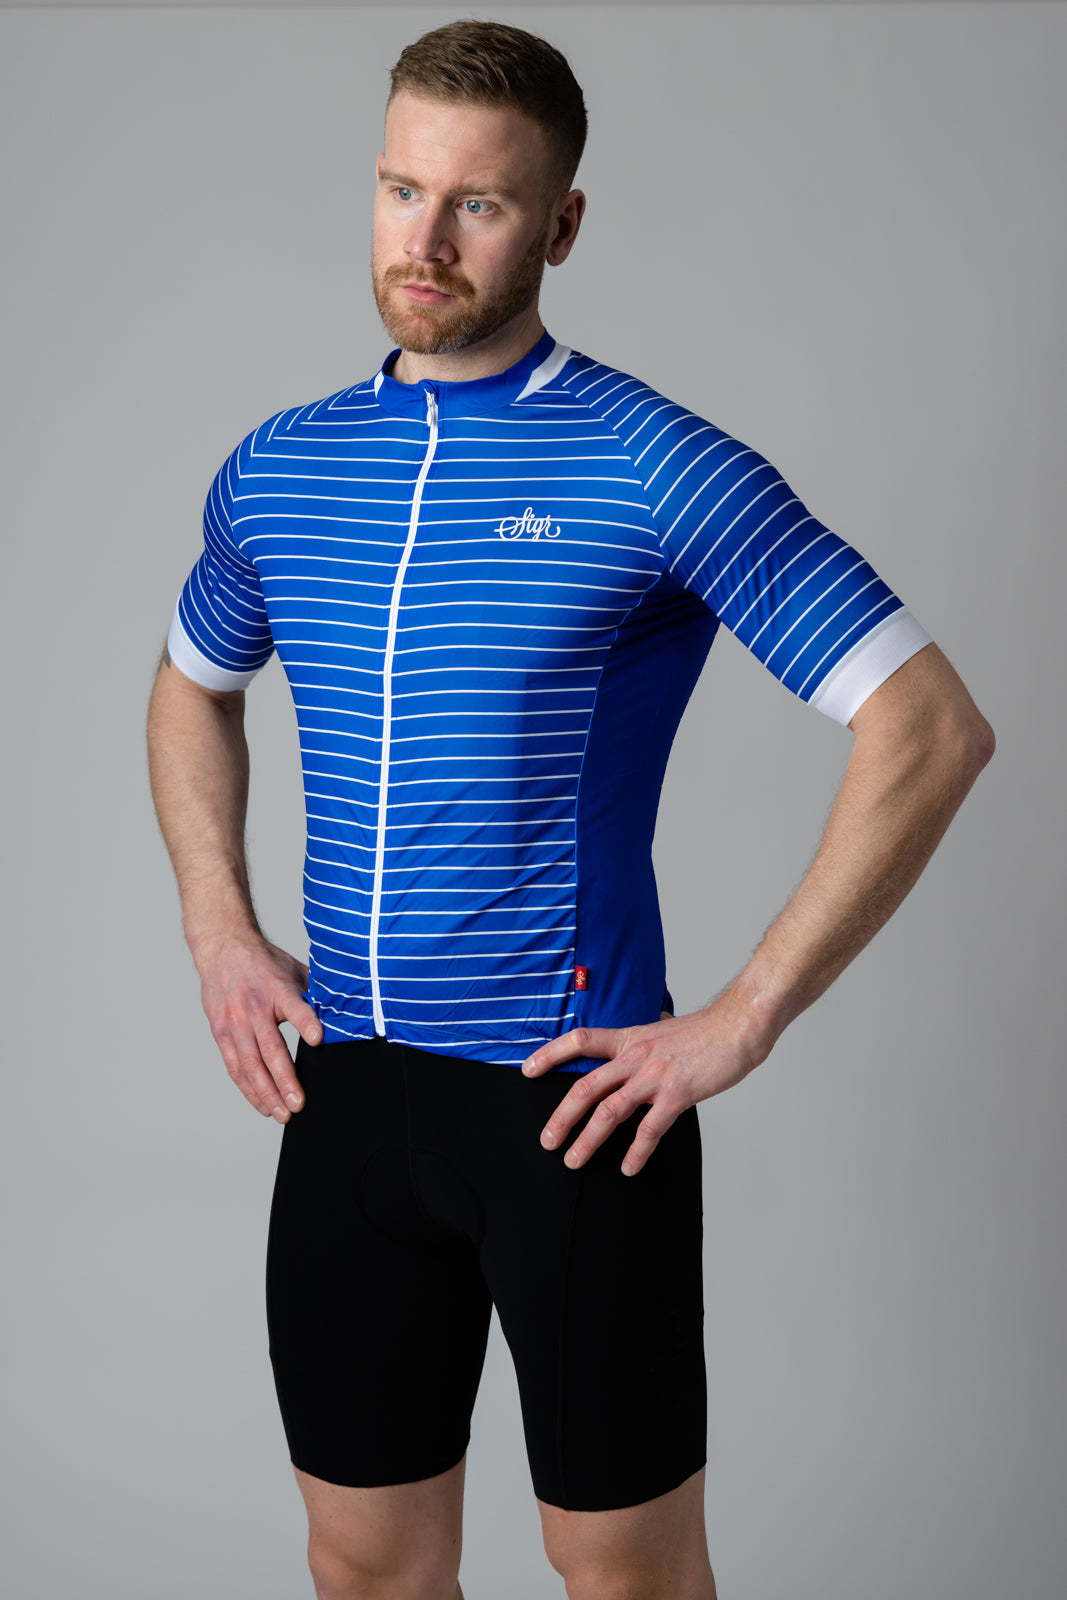 Blue Horizon - Road Cycling Jersey for Men